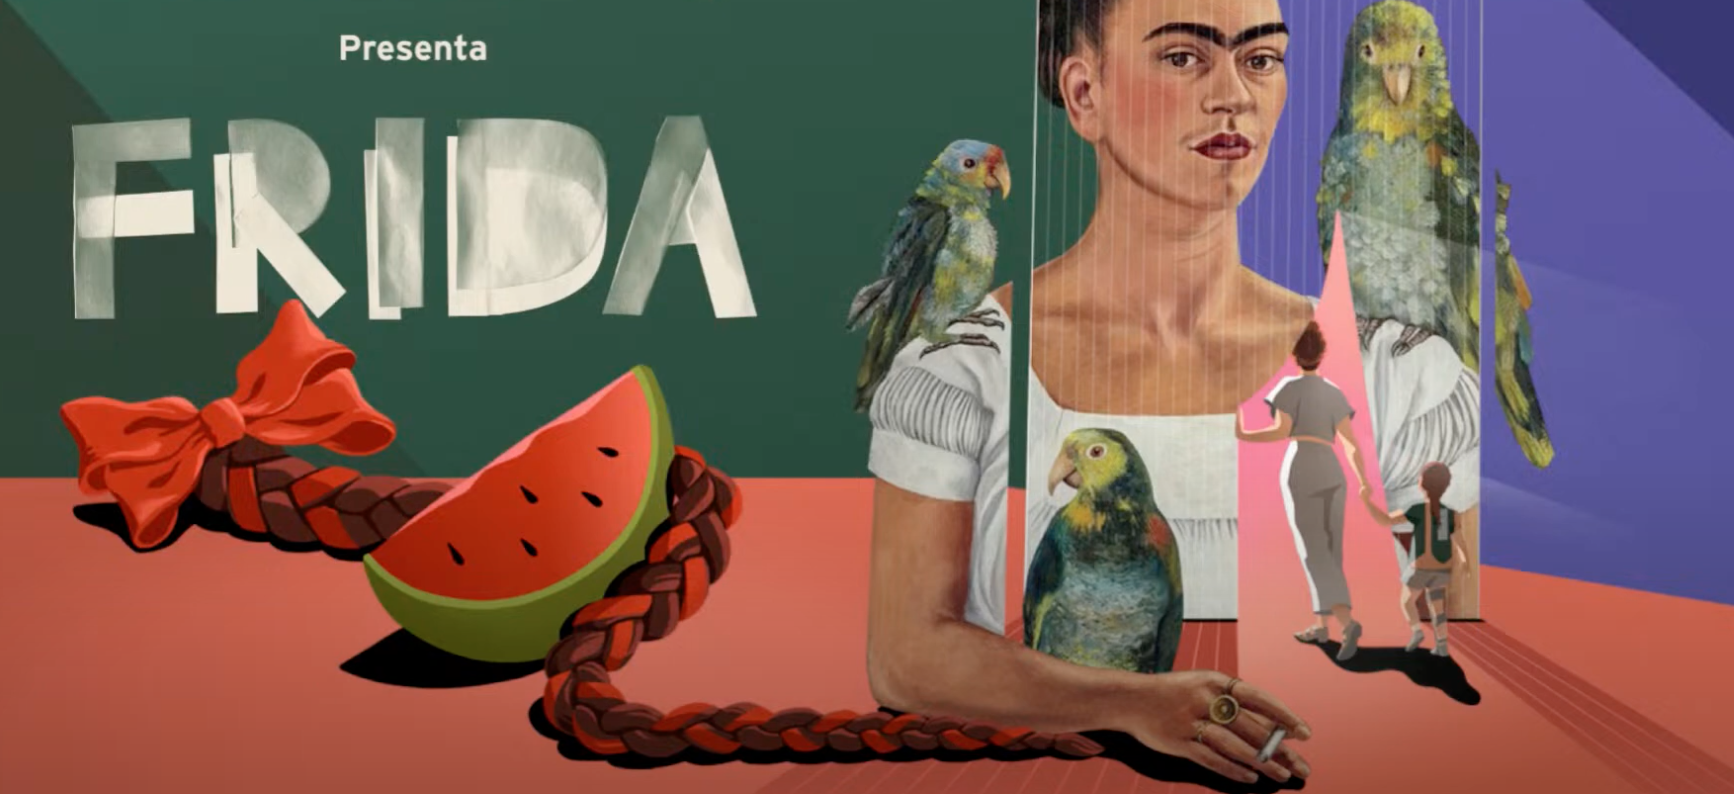 The immersive exhibition Frida Kahlo.